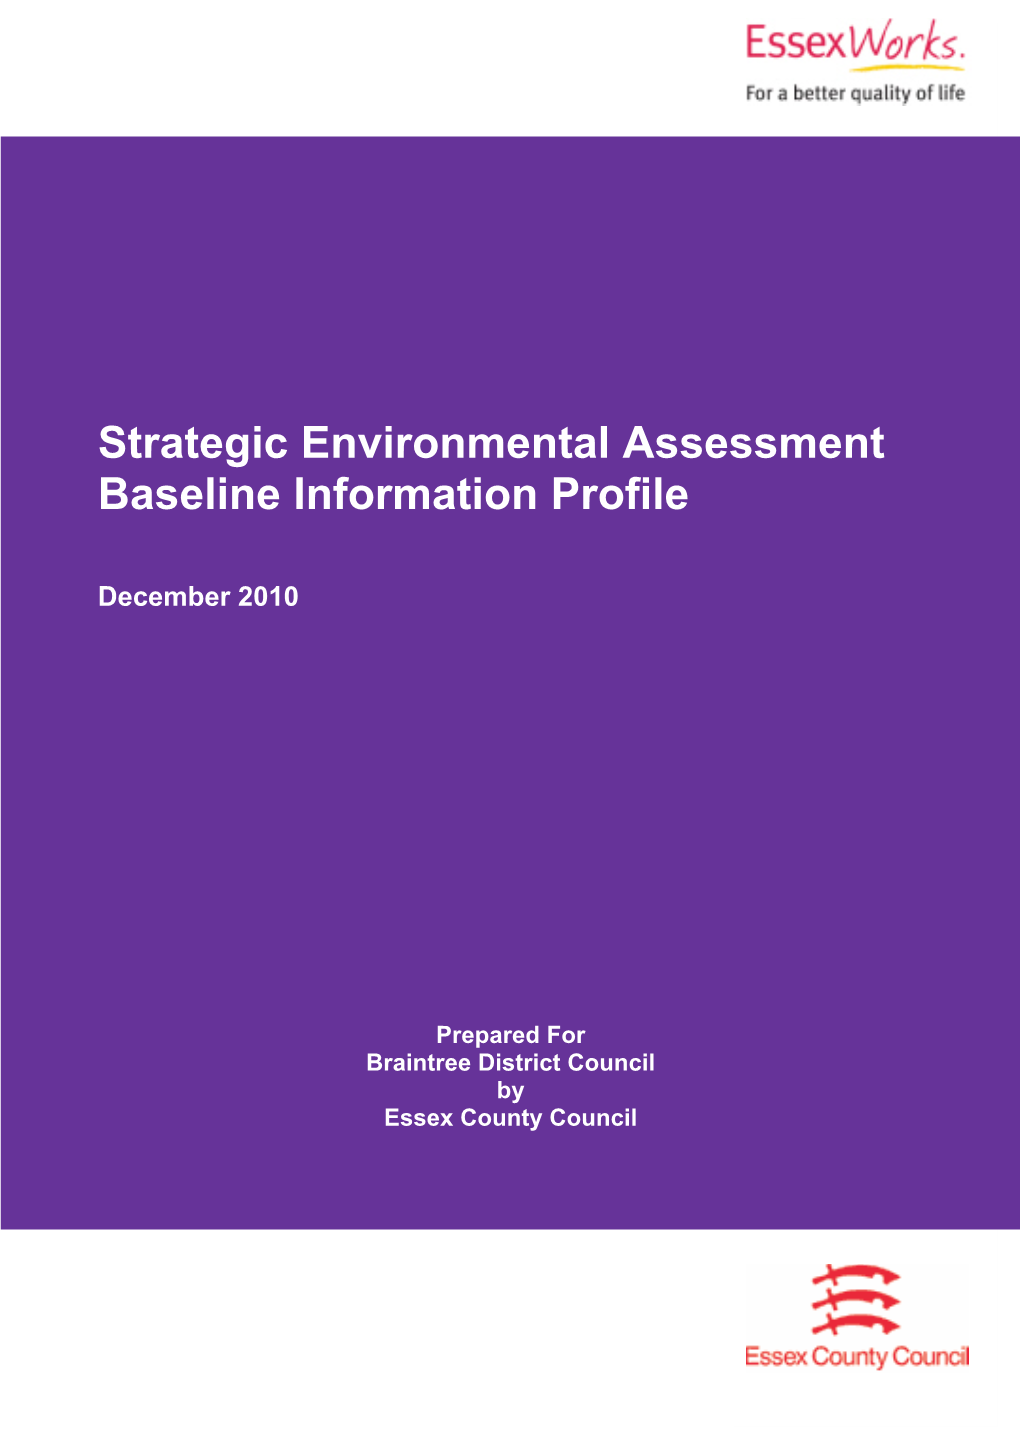 Strategic Environmental Assessment Baseline Information Profile